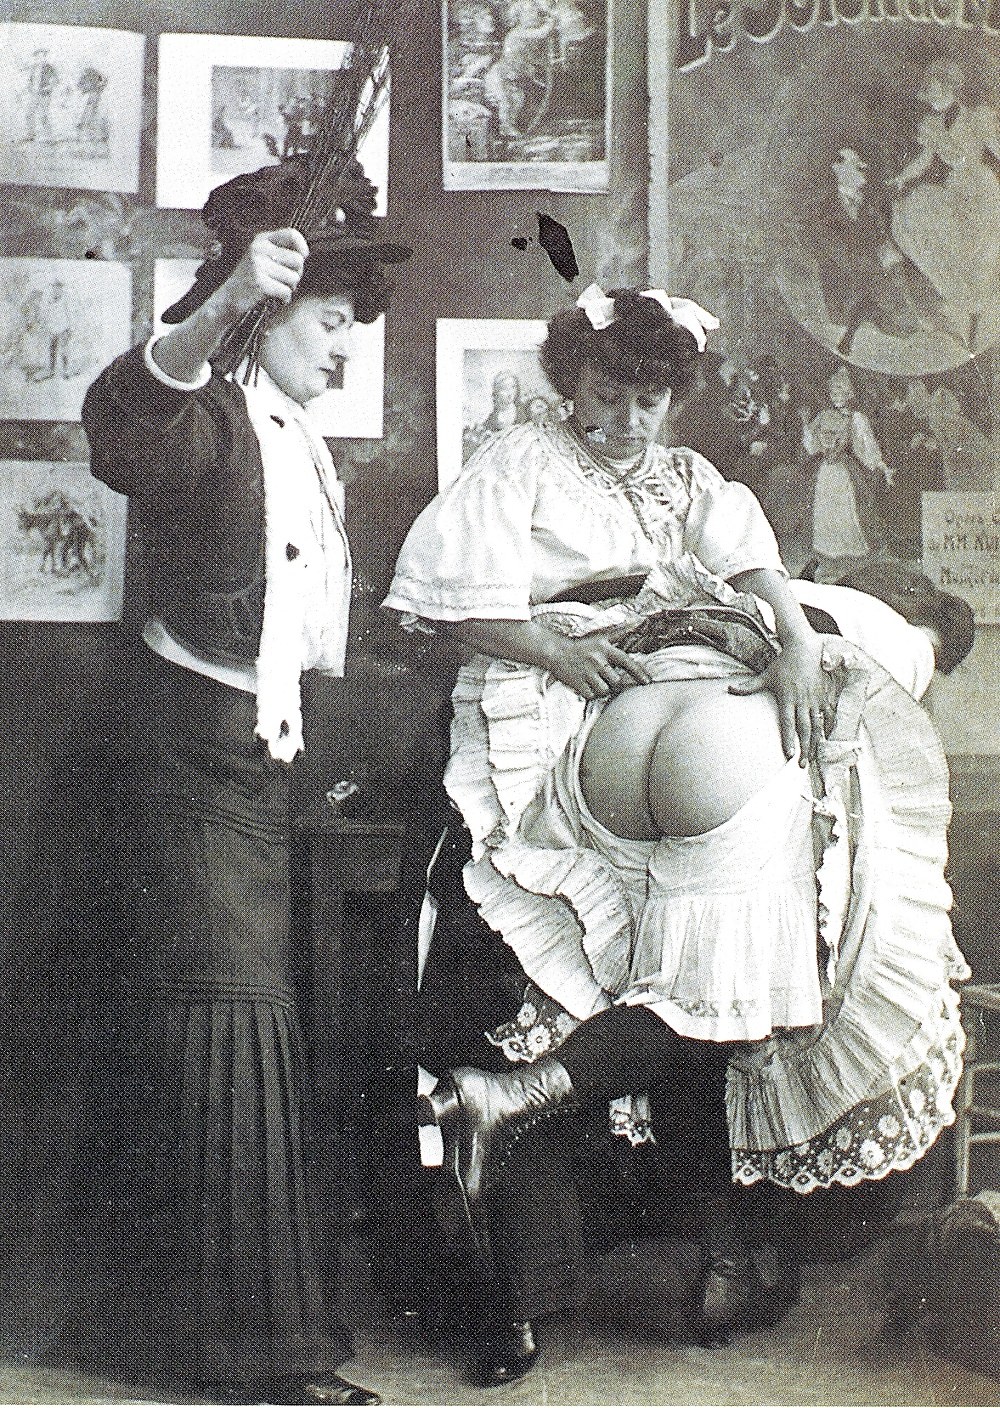 порно ретро фото 19 века фото фото 77